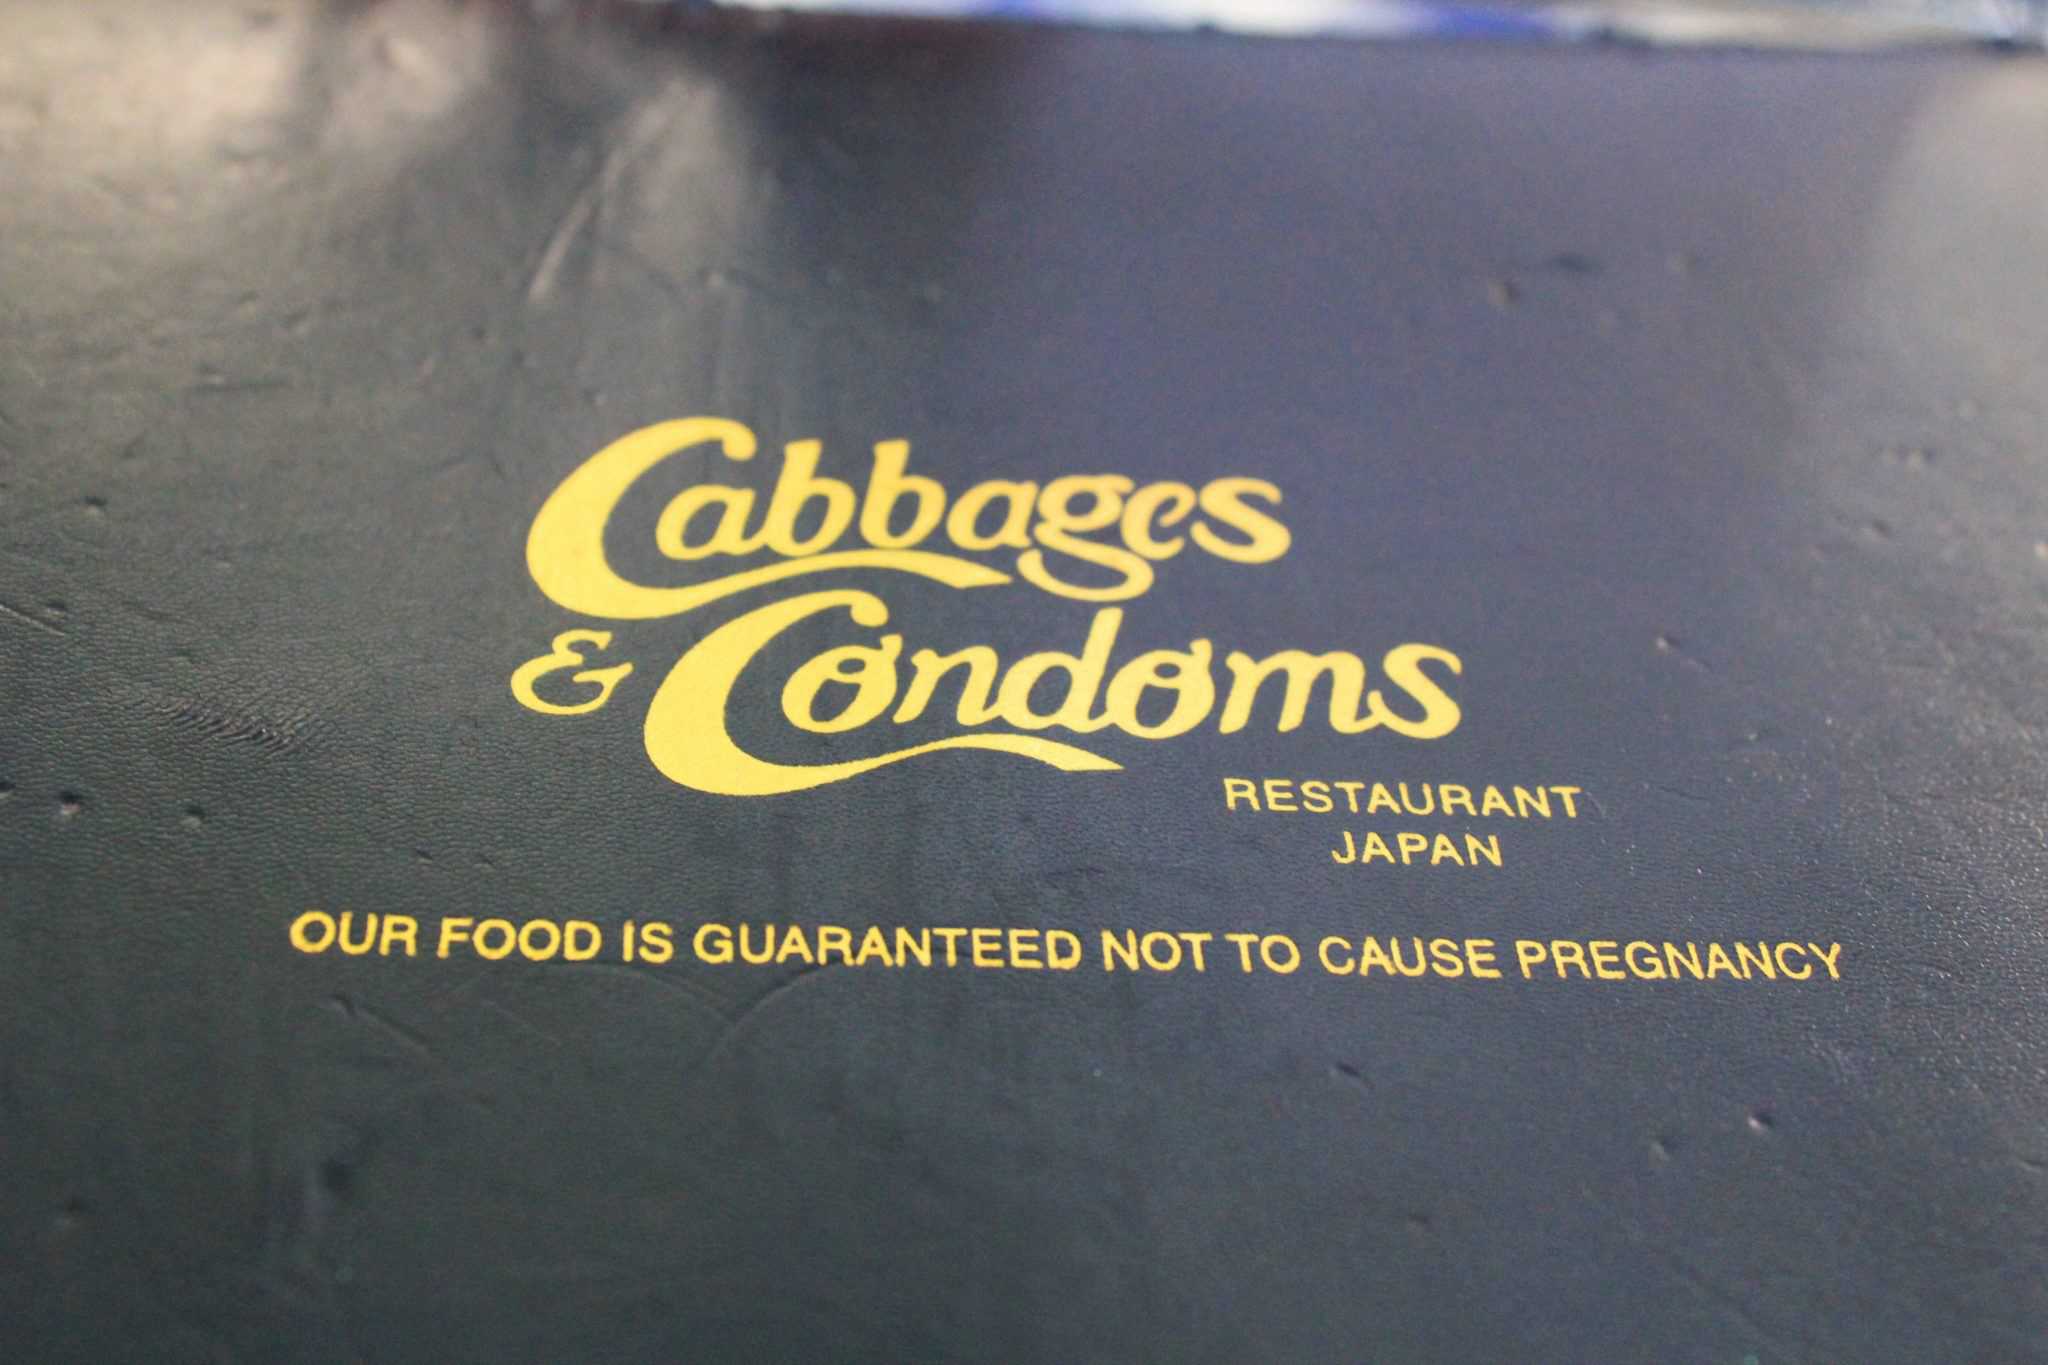 condoms and cabbages menu